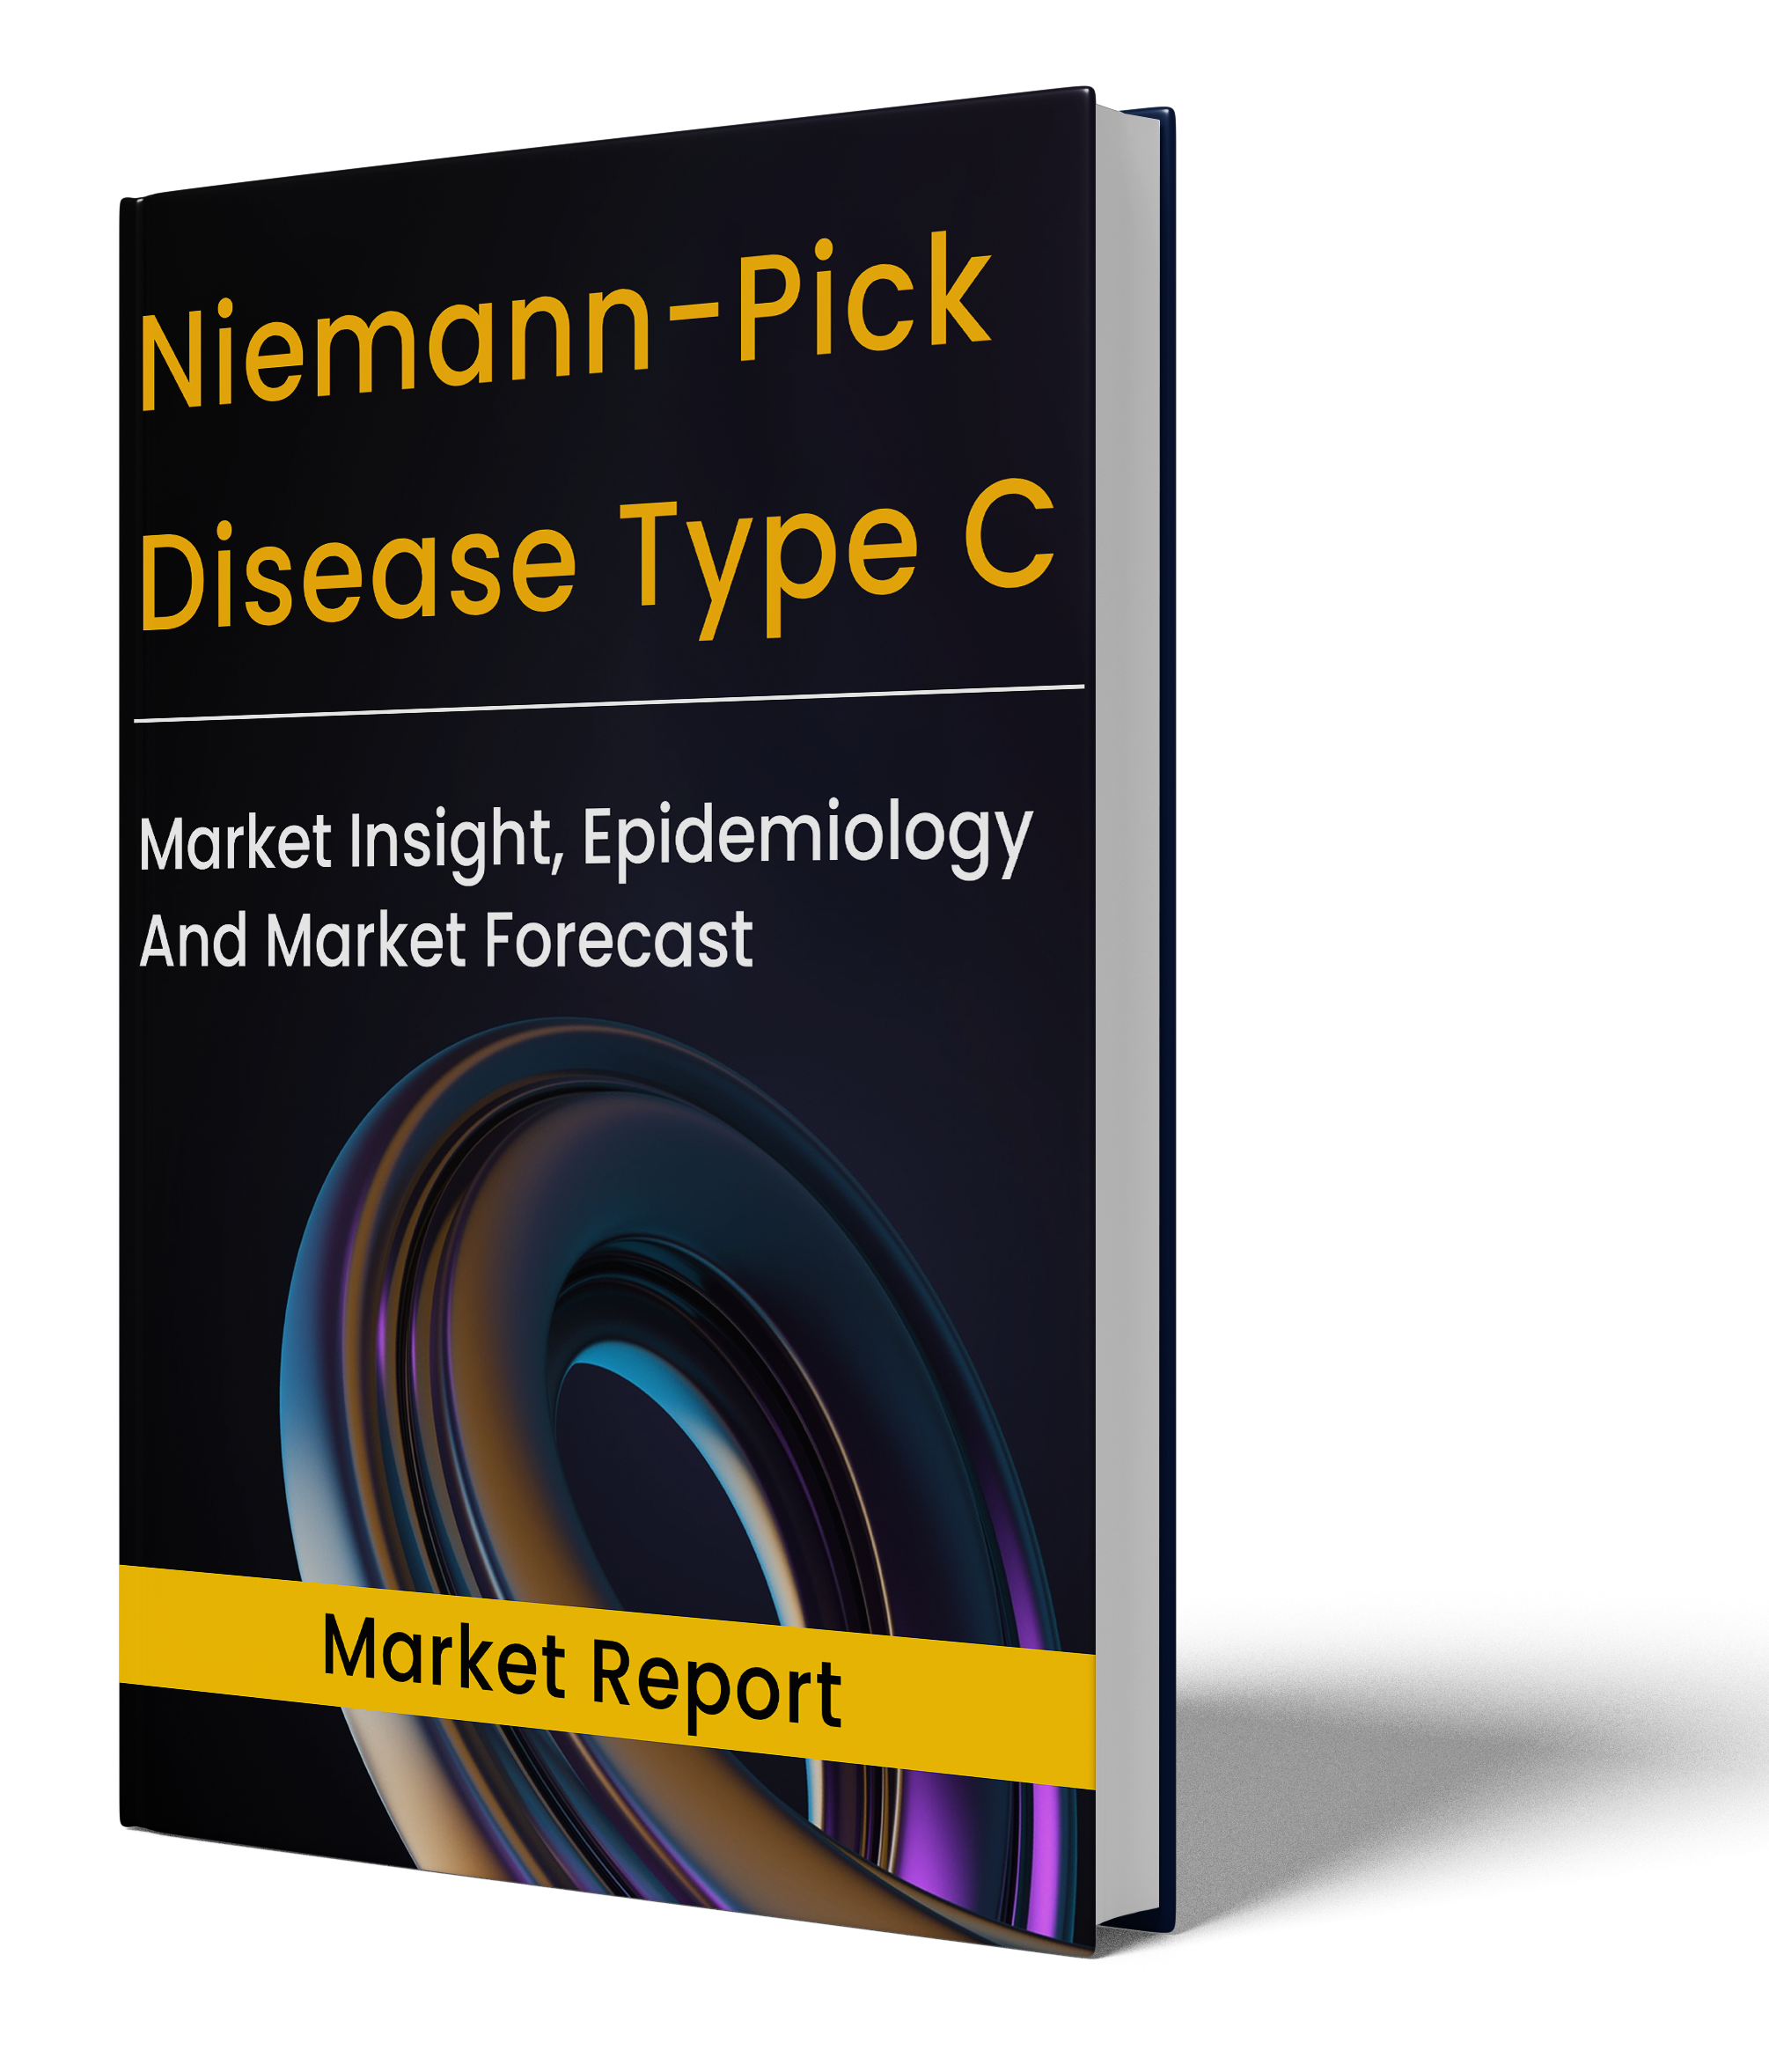 Niemann-Pick Disease Type C market report